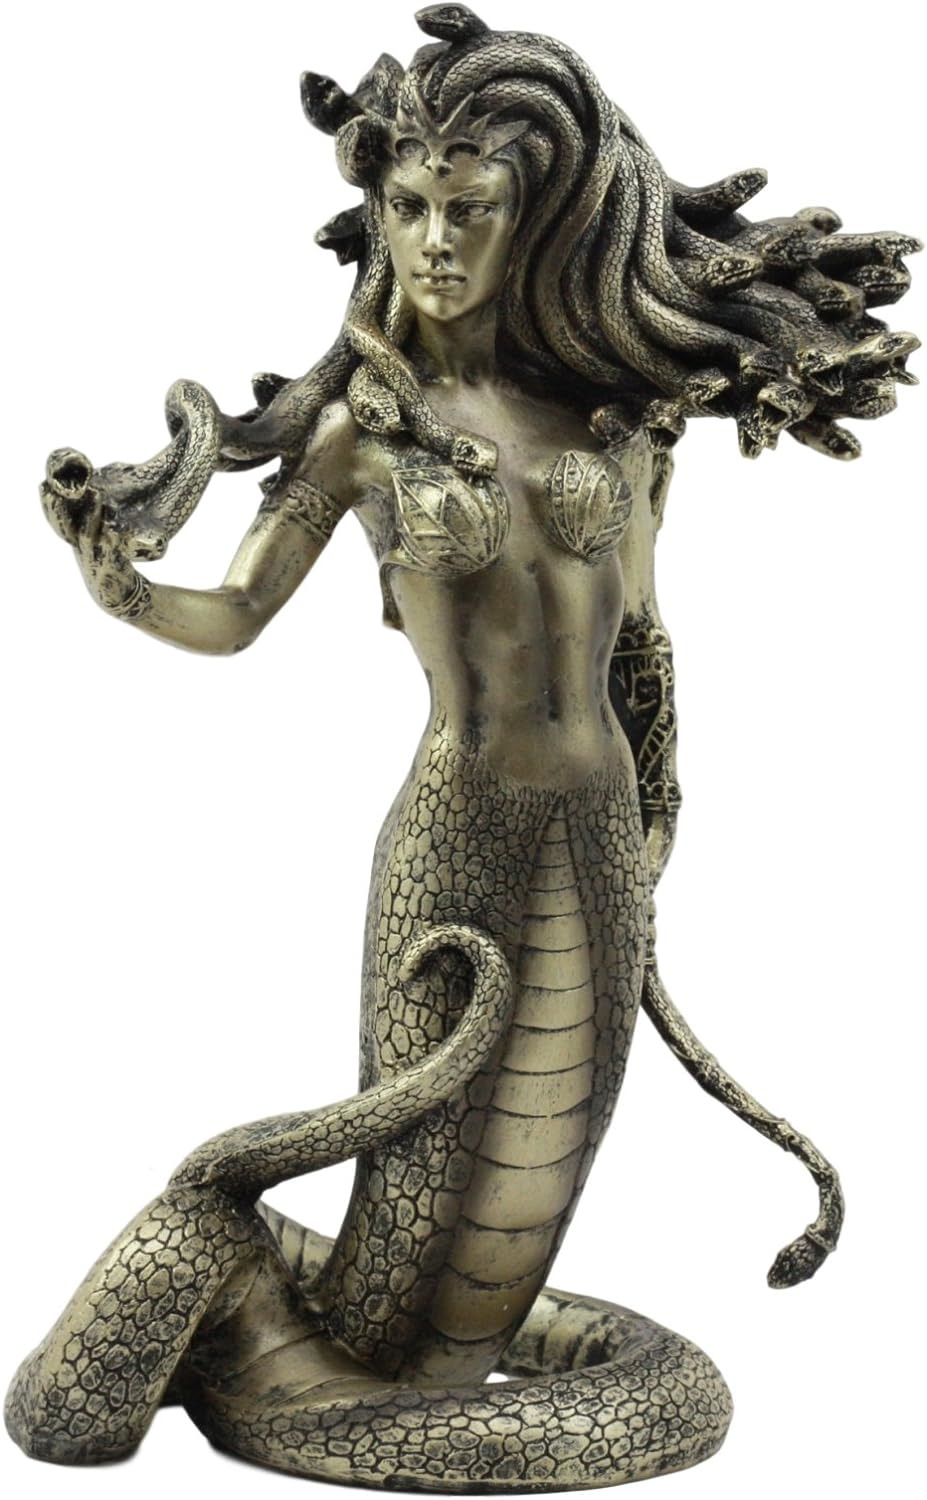 Ebros Greek Mythology The Seductive Spell of Medusa Statue 8 Tall Temptation of